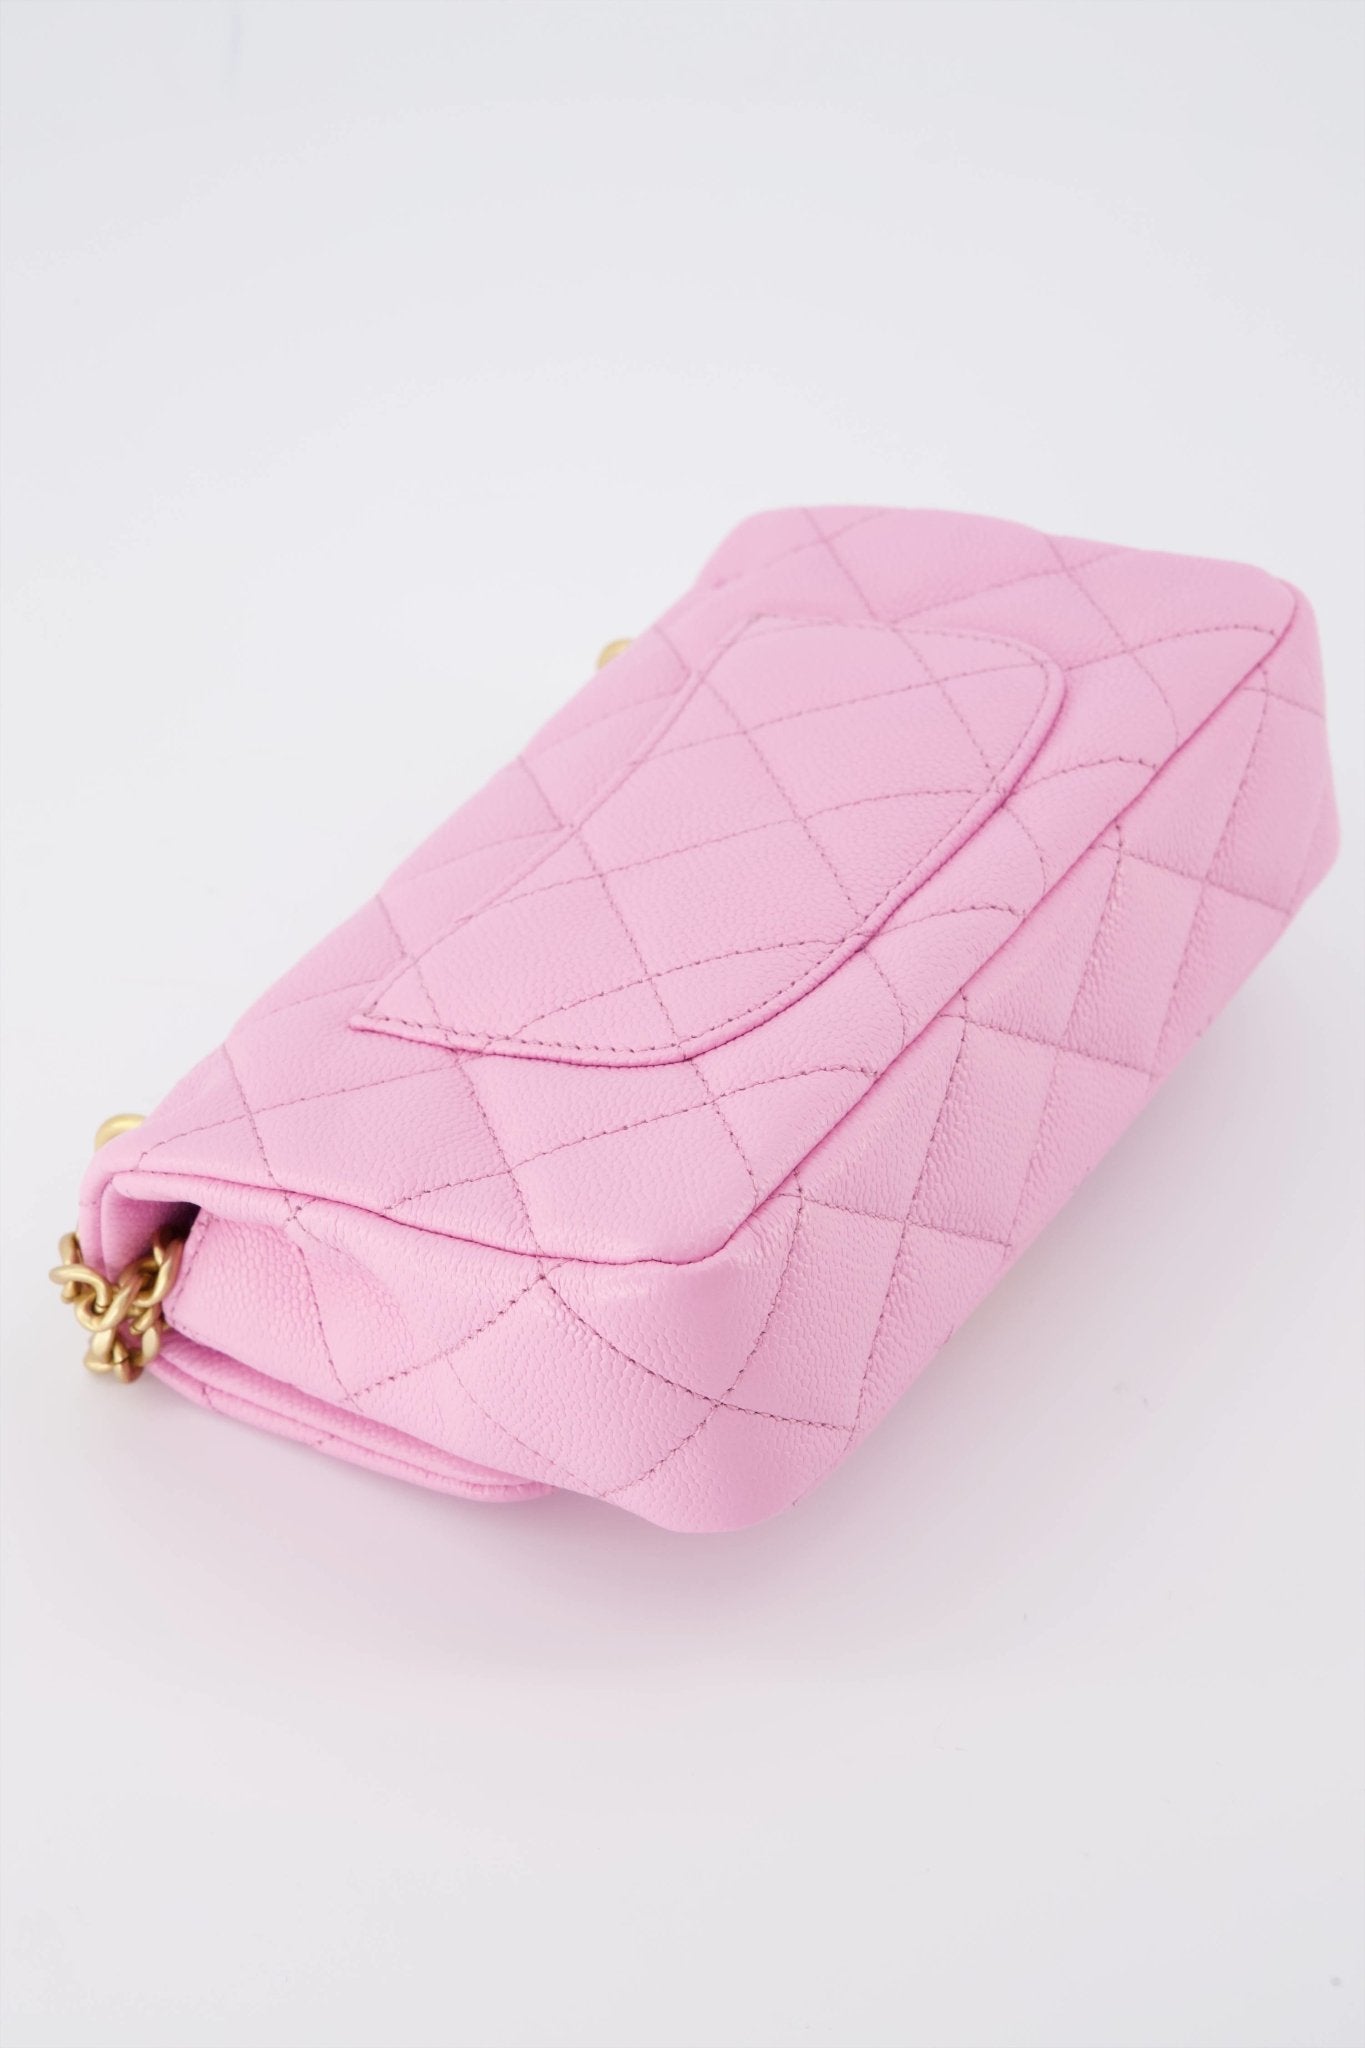 Chanel Sweetheart Mini Flap Pink Bag